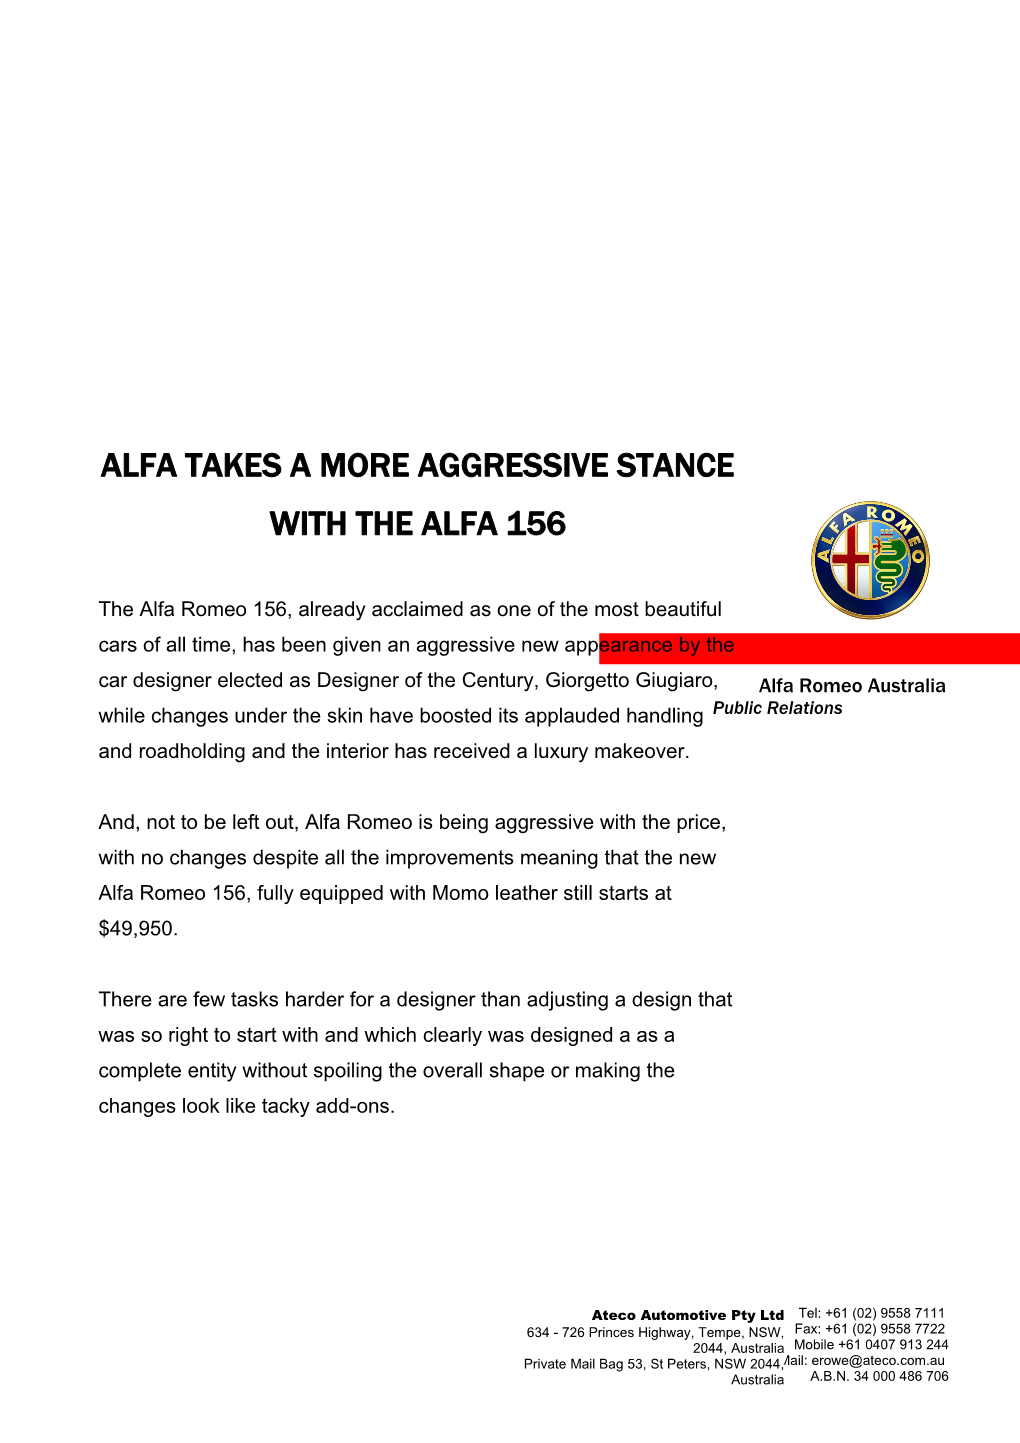 Alfa Takes a More Aggressive Stance with the Alfa 156